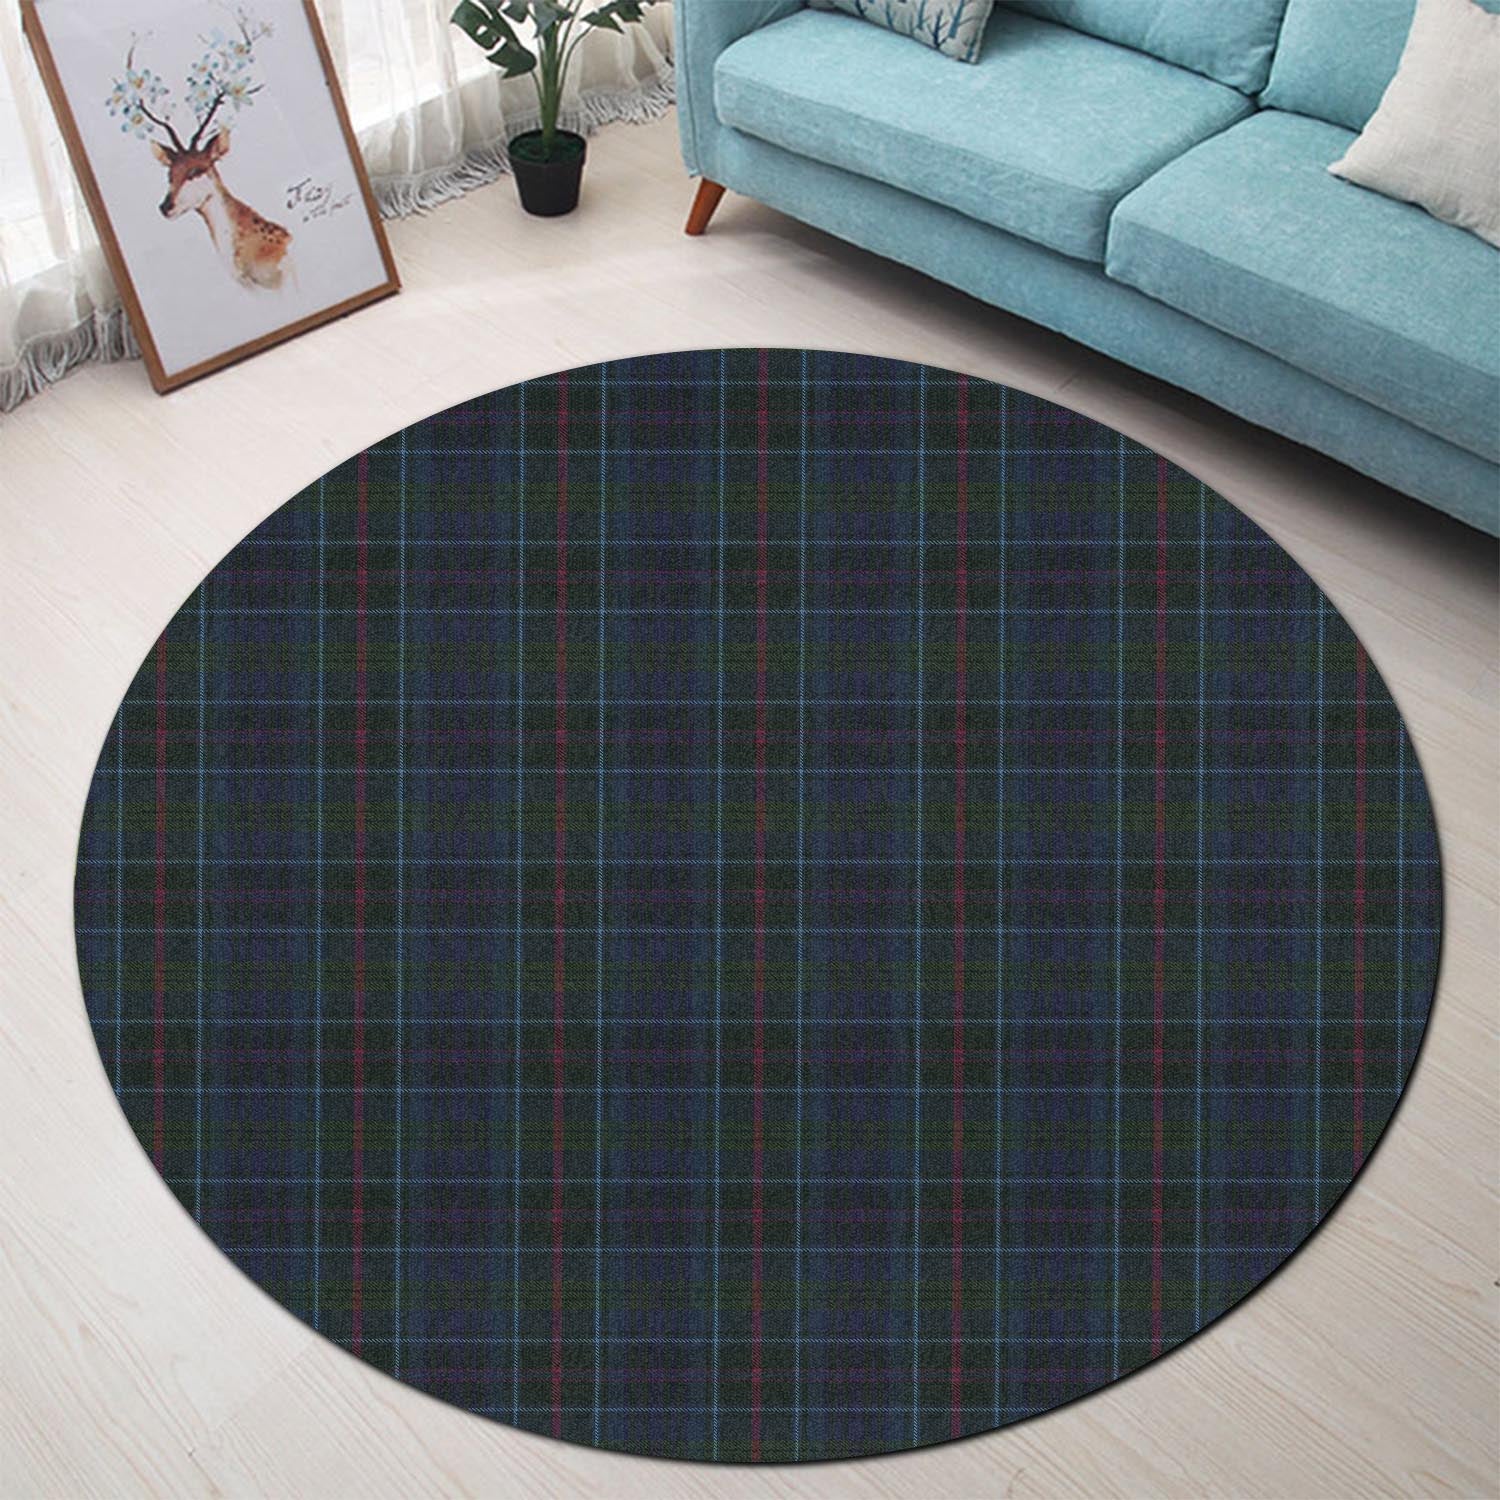 richard-of-wales-tartan-round-rug